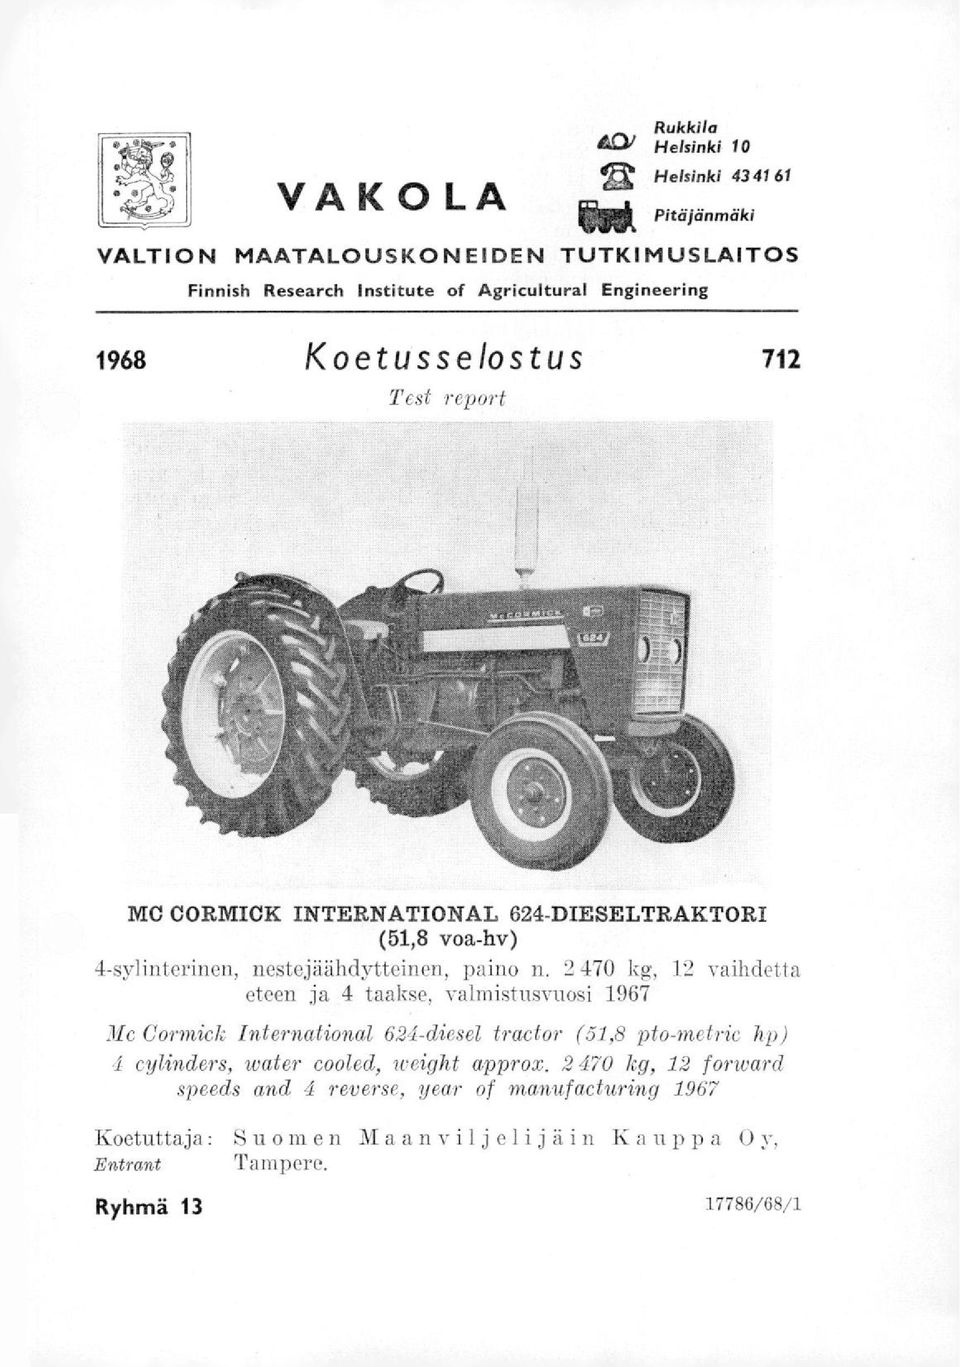 2 470 kg, 12 vaihdetta eteen ja 4 taakse, valmistusvuosi 1967 Me Cormick International 624-diesel tractor (51,8 pto-metric hp) 4 cylinders, water cooled,